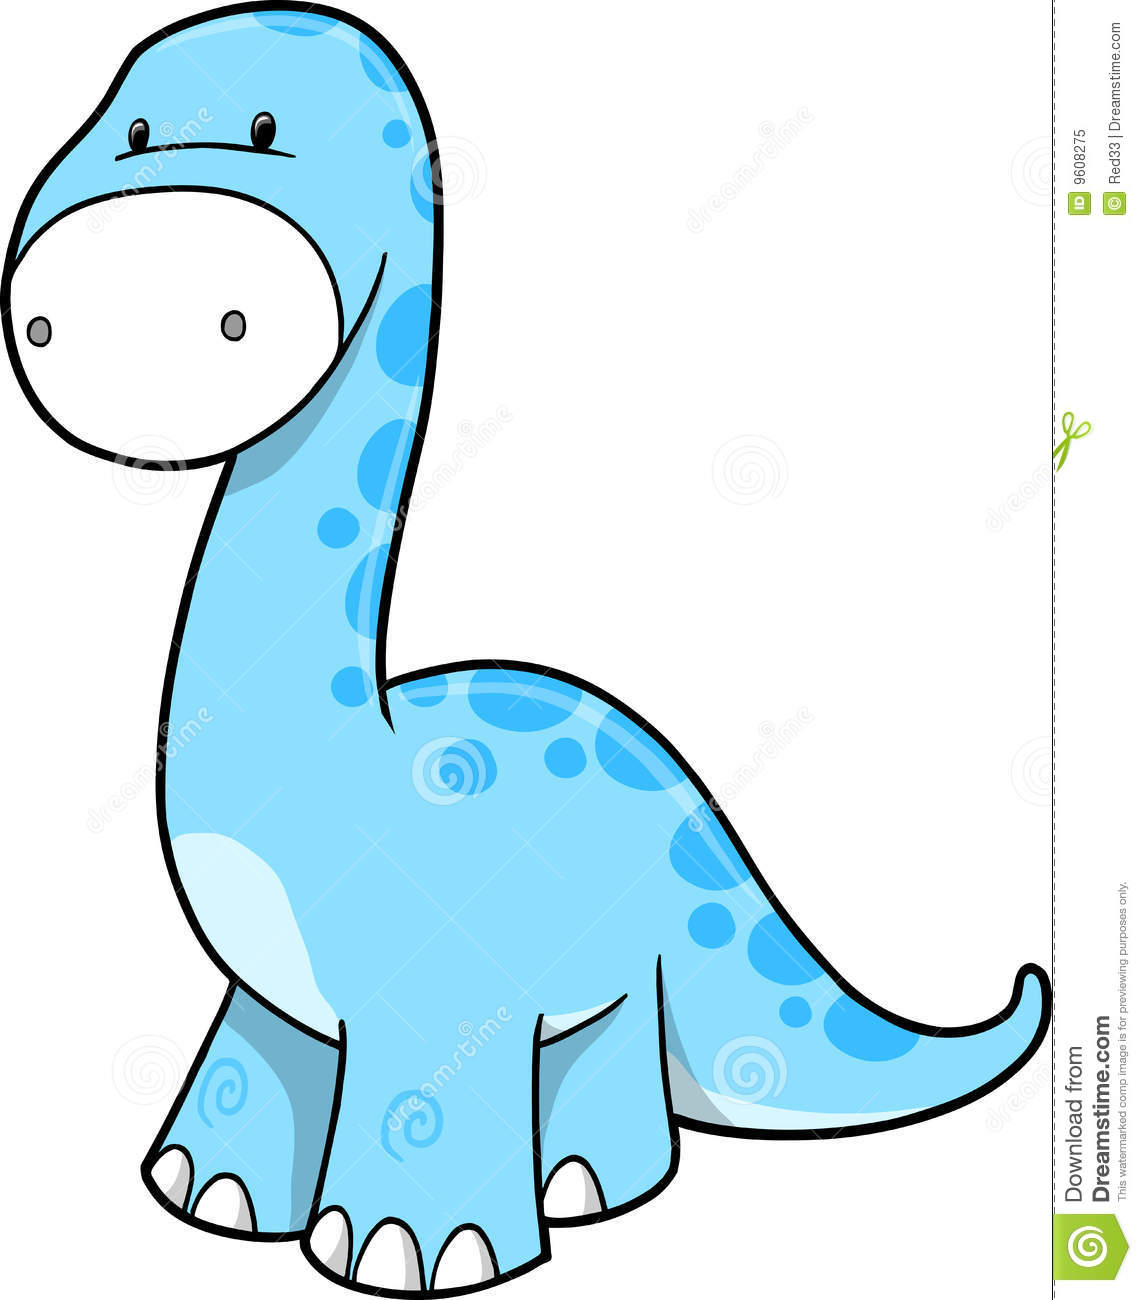 Cute Dinosaur Vector Illustration Royalty Free Stock Photo   Image